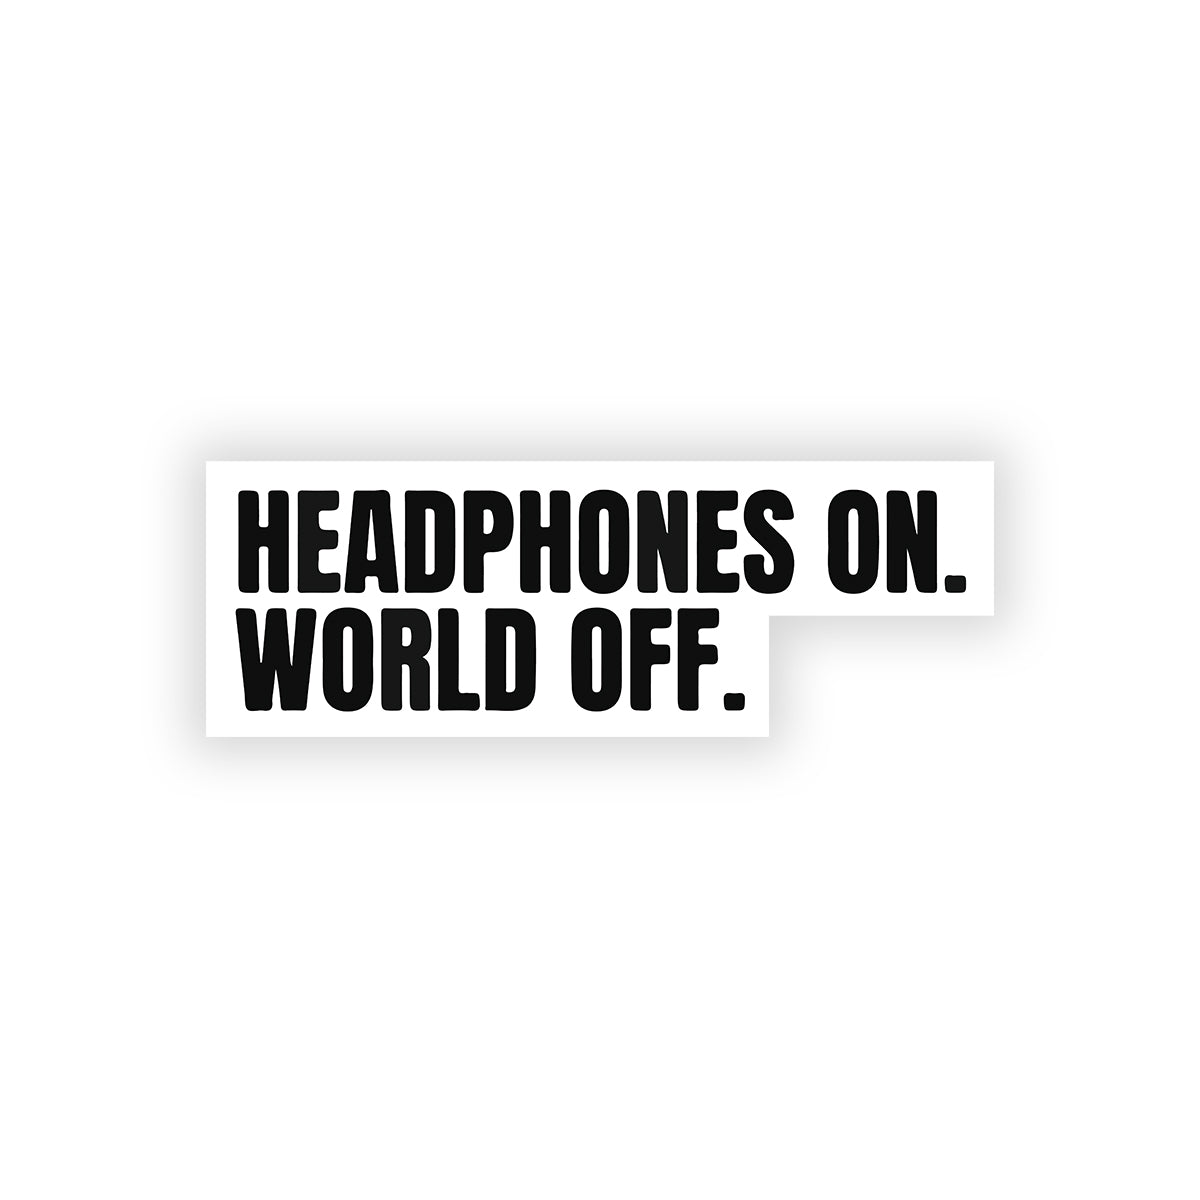 Headphones on world off